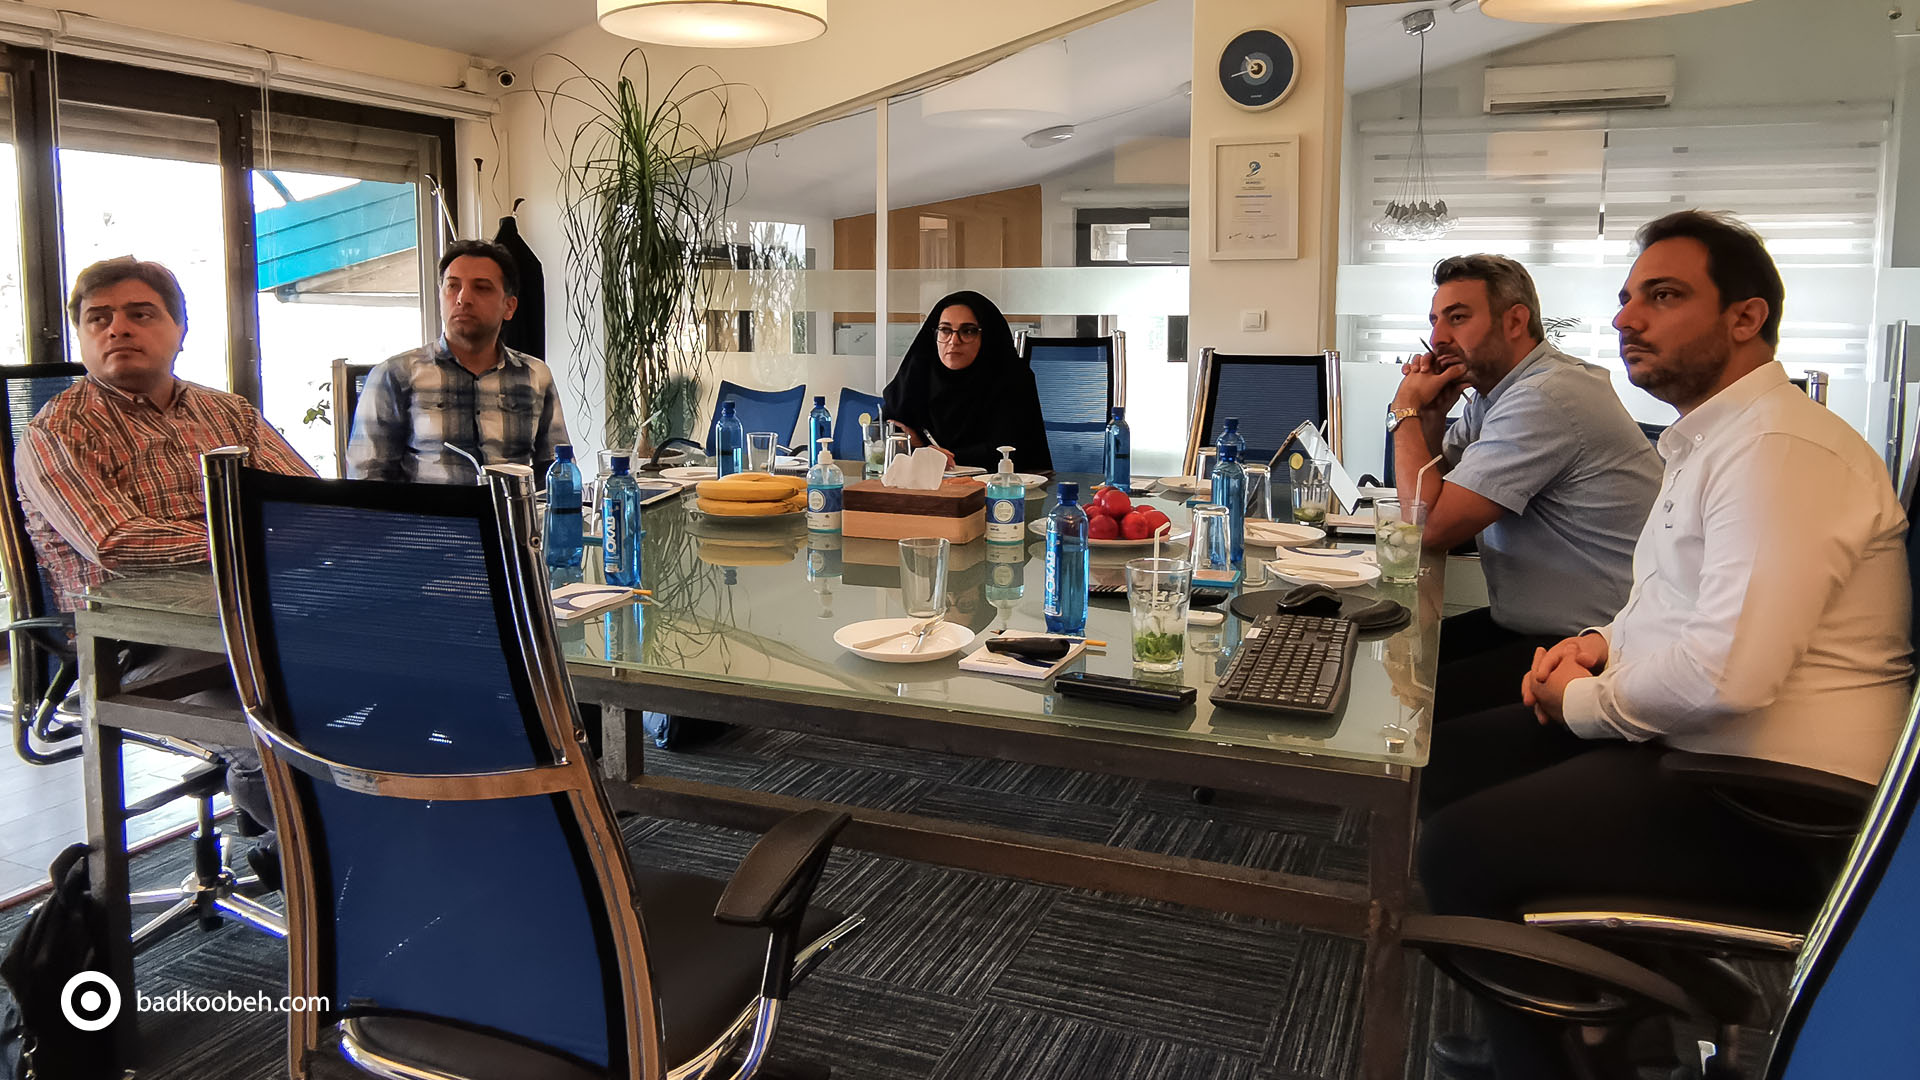 IRIB Officials Visit Badkoobeh Agency to Explore Creative Communication Strategies